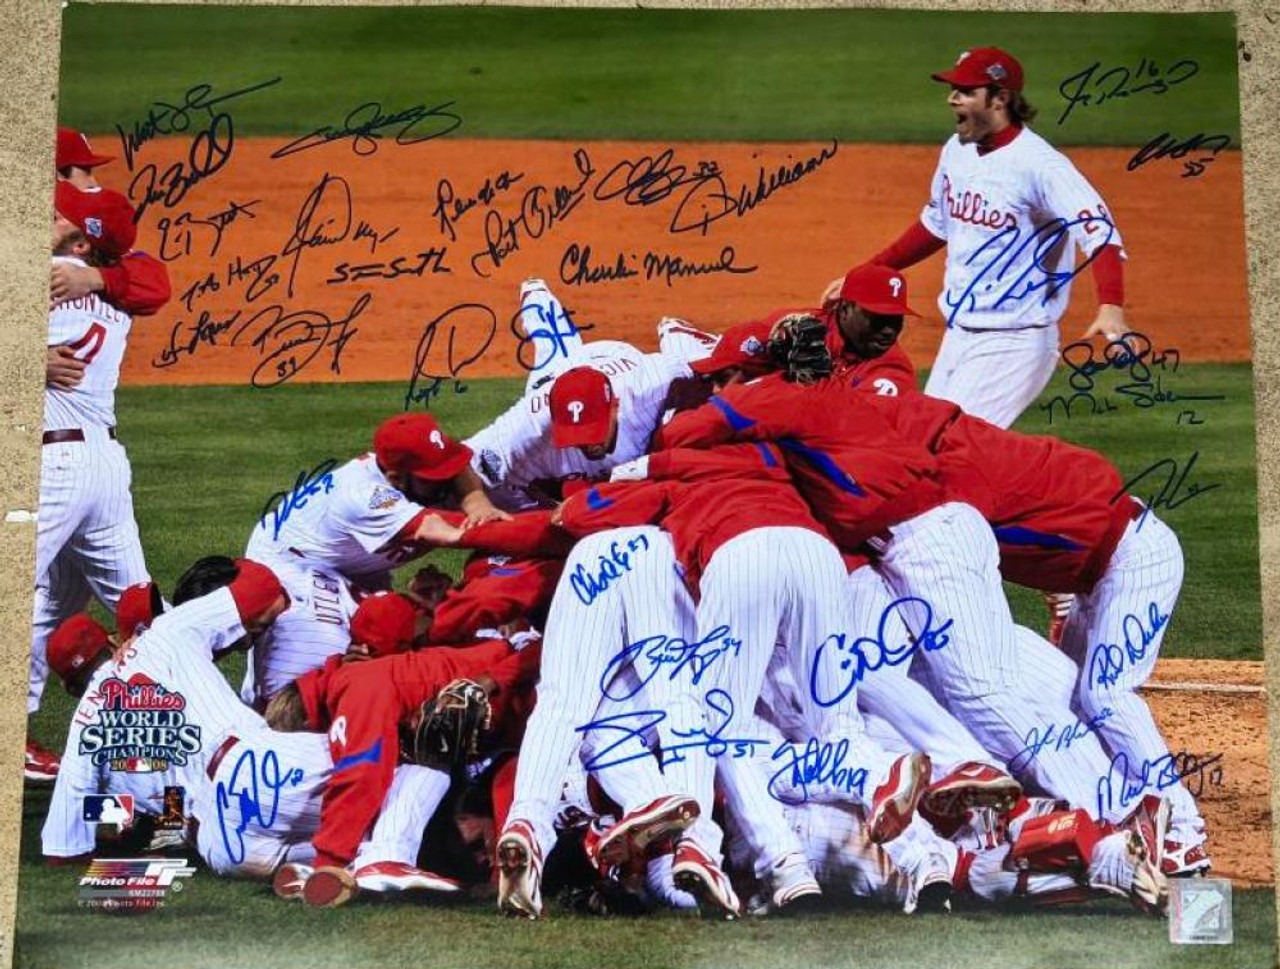 2008 Philadelphia Phillies World Series Champs Team Signed Jersey